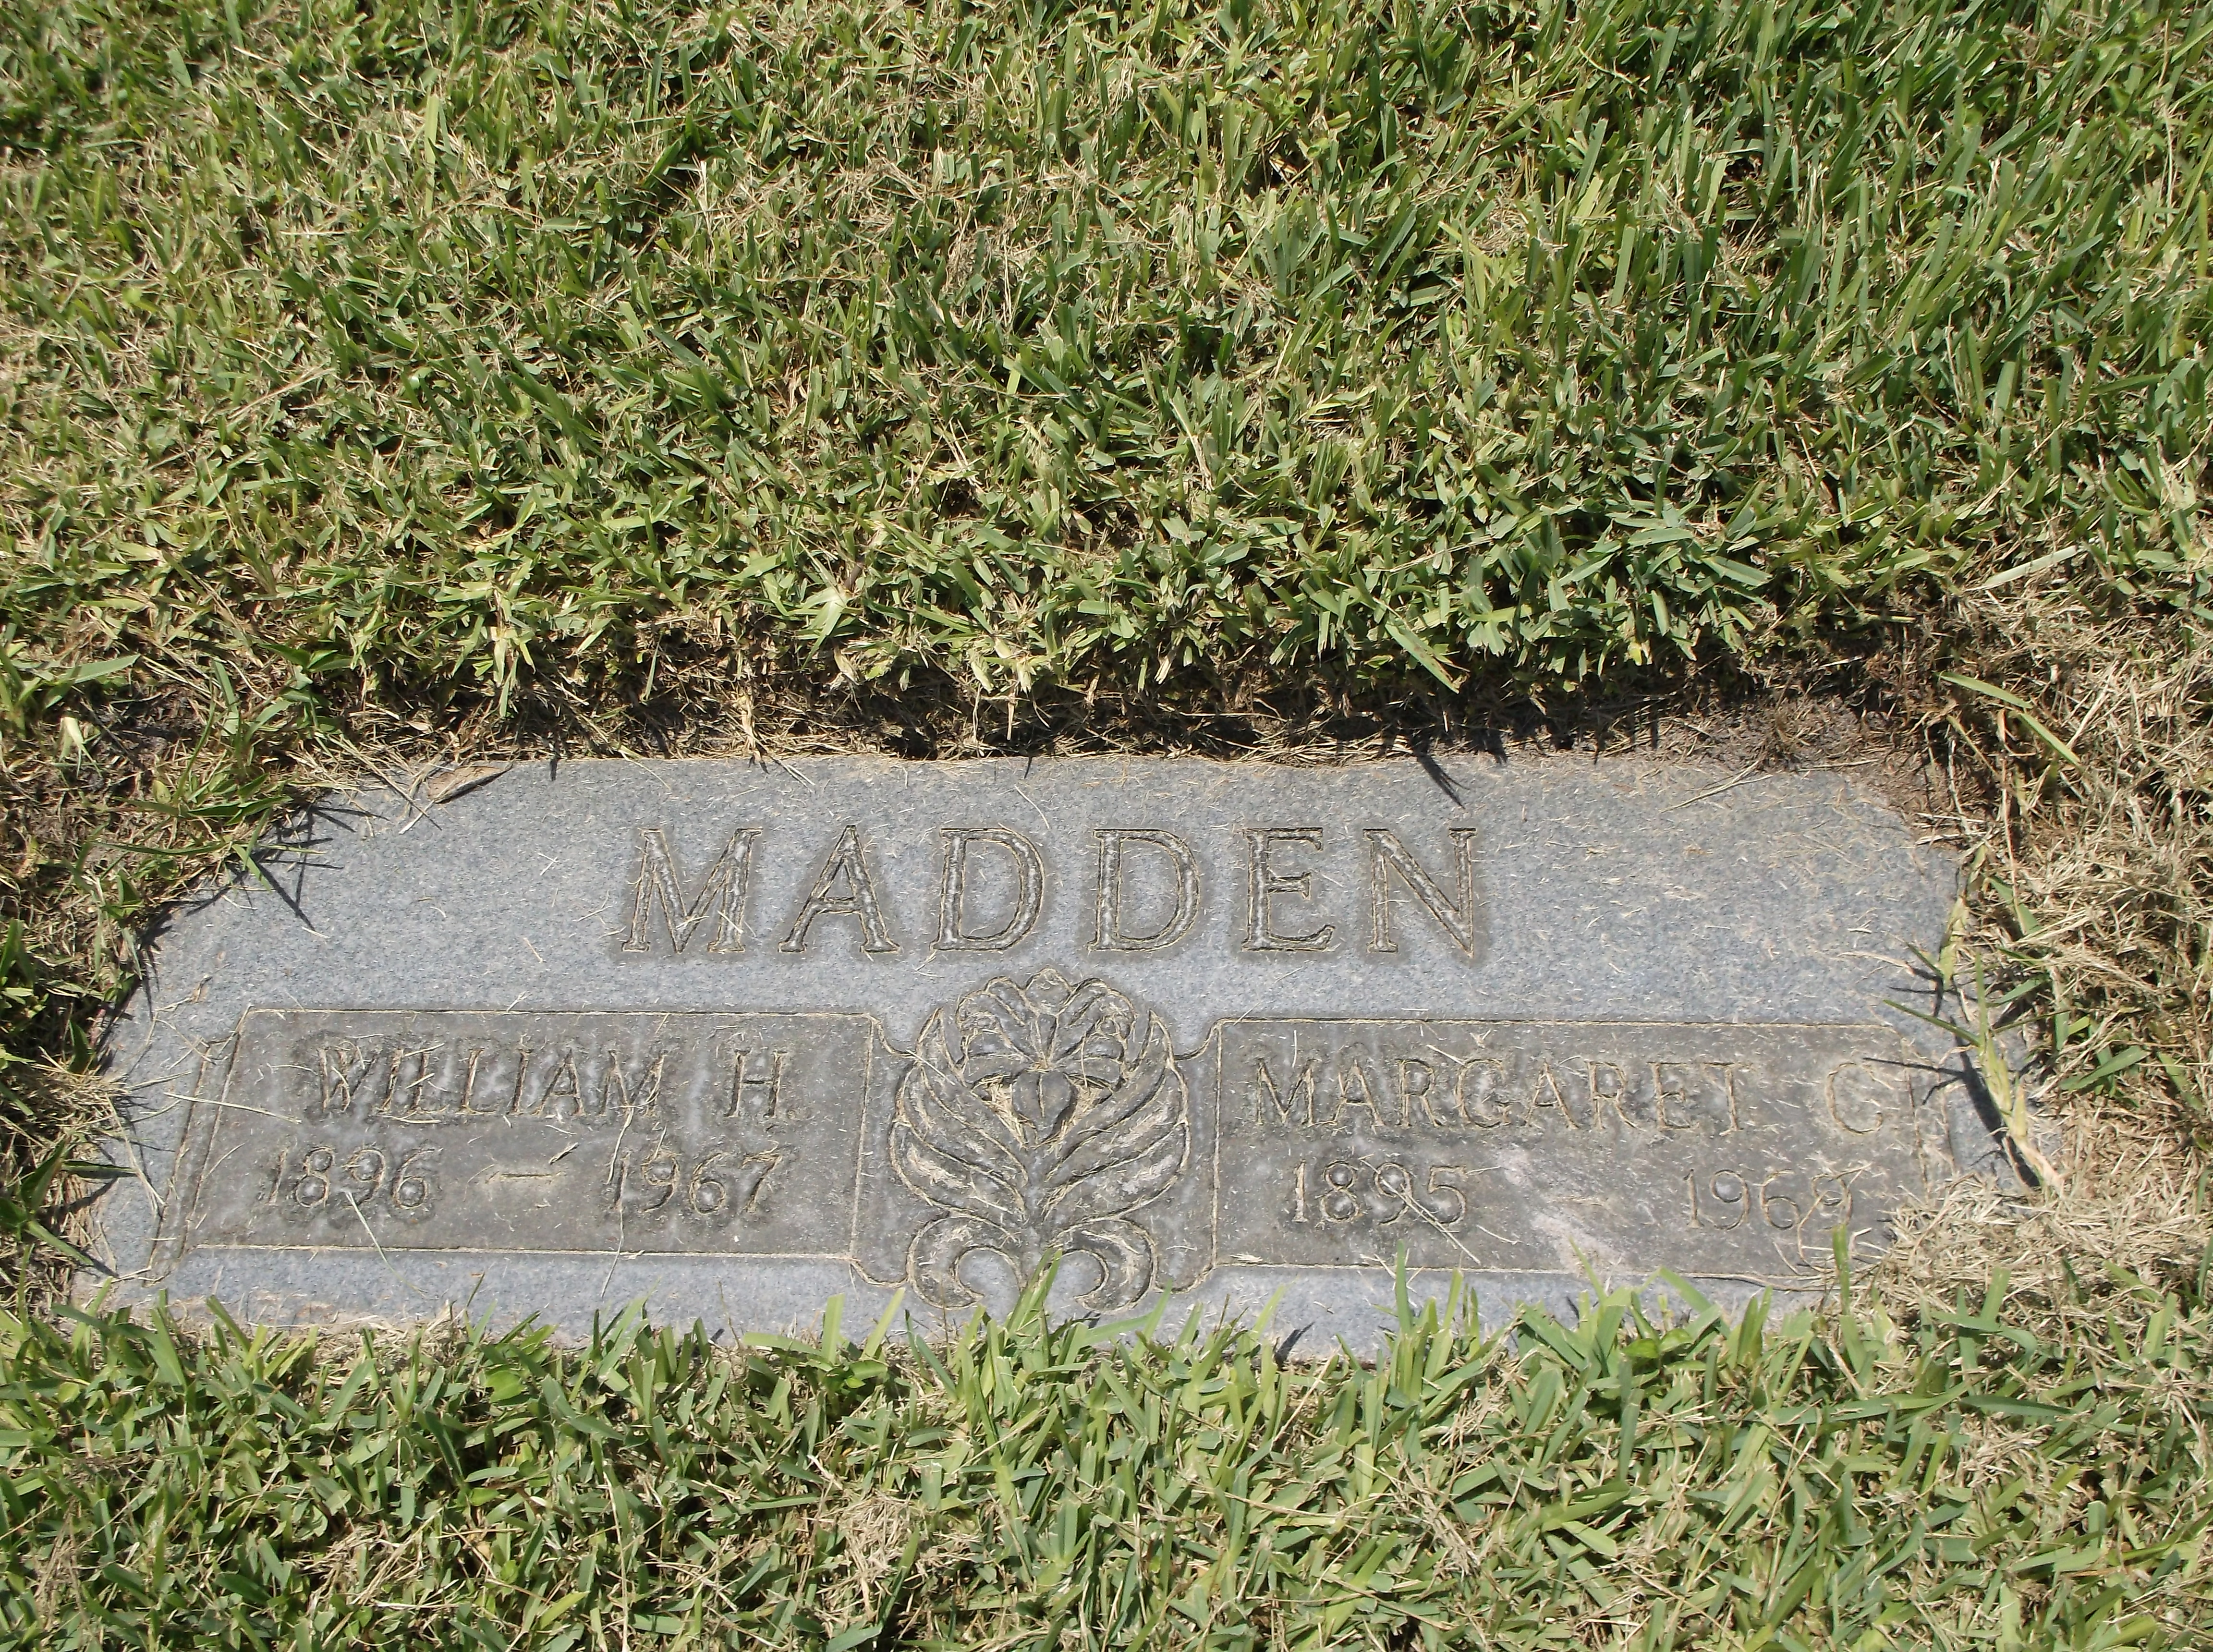 William H Madden